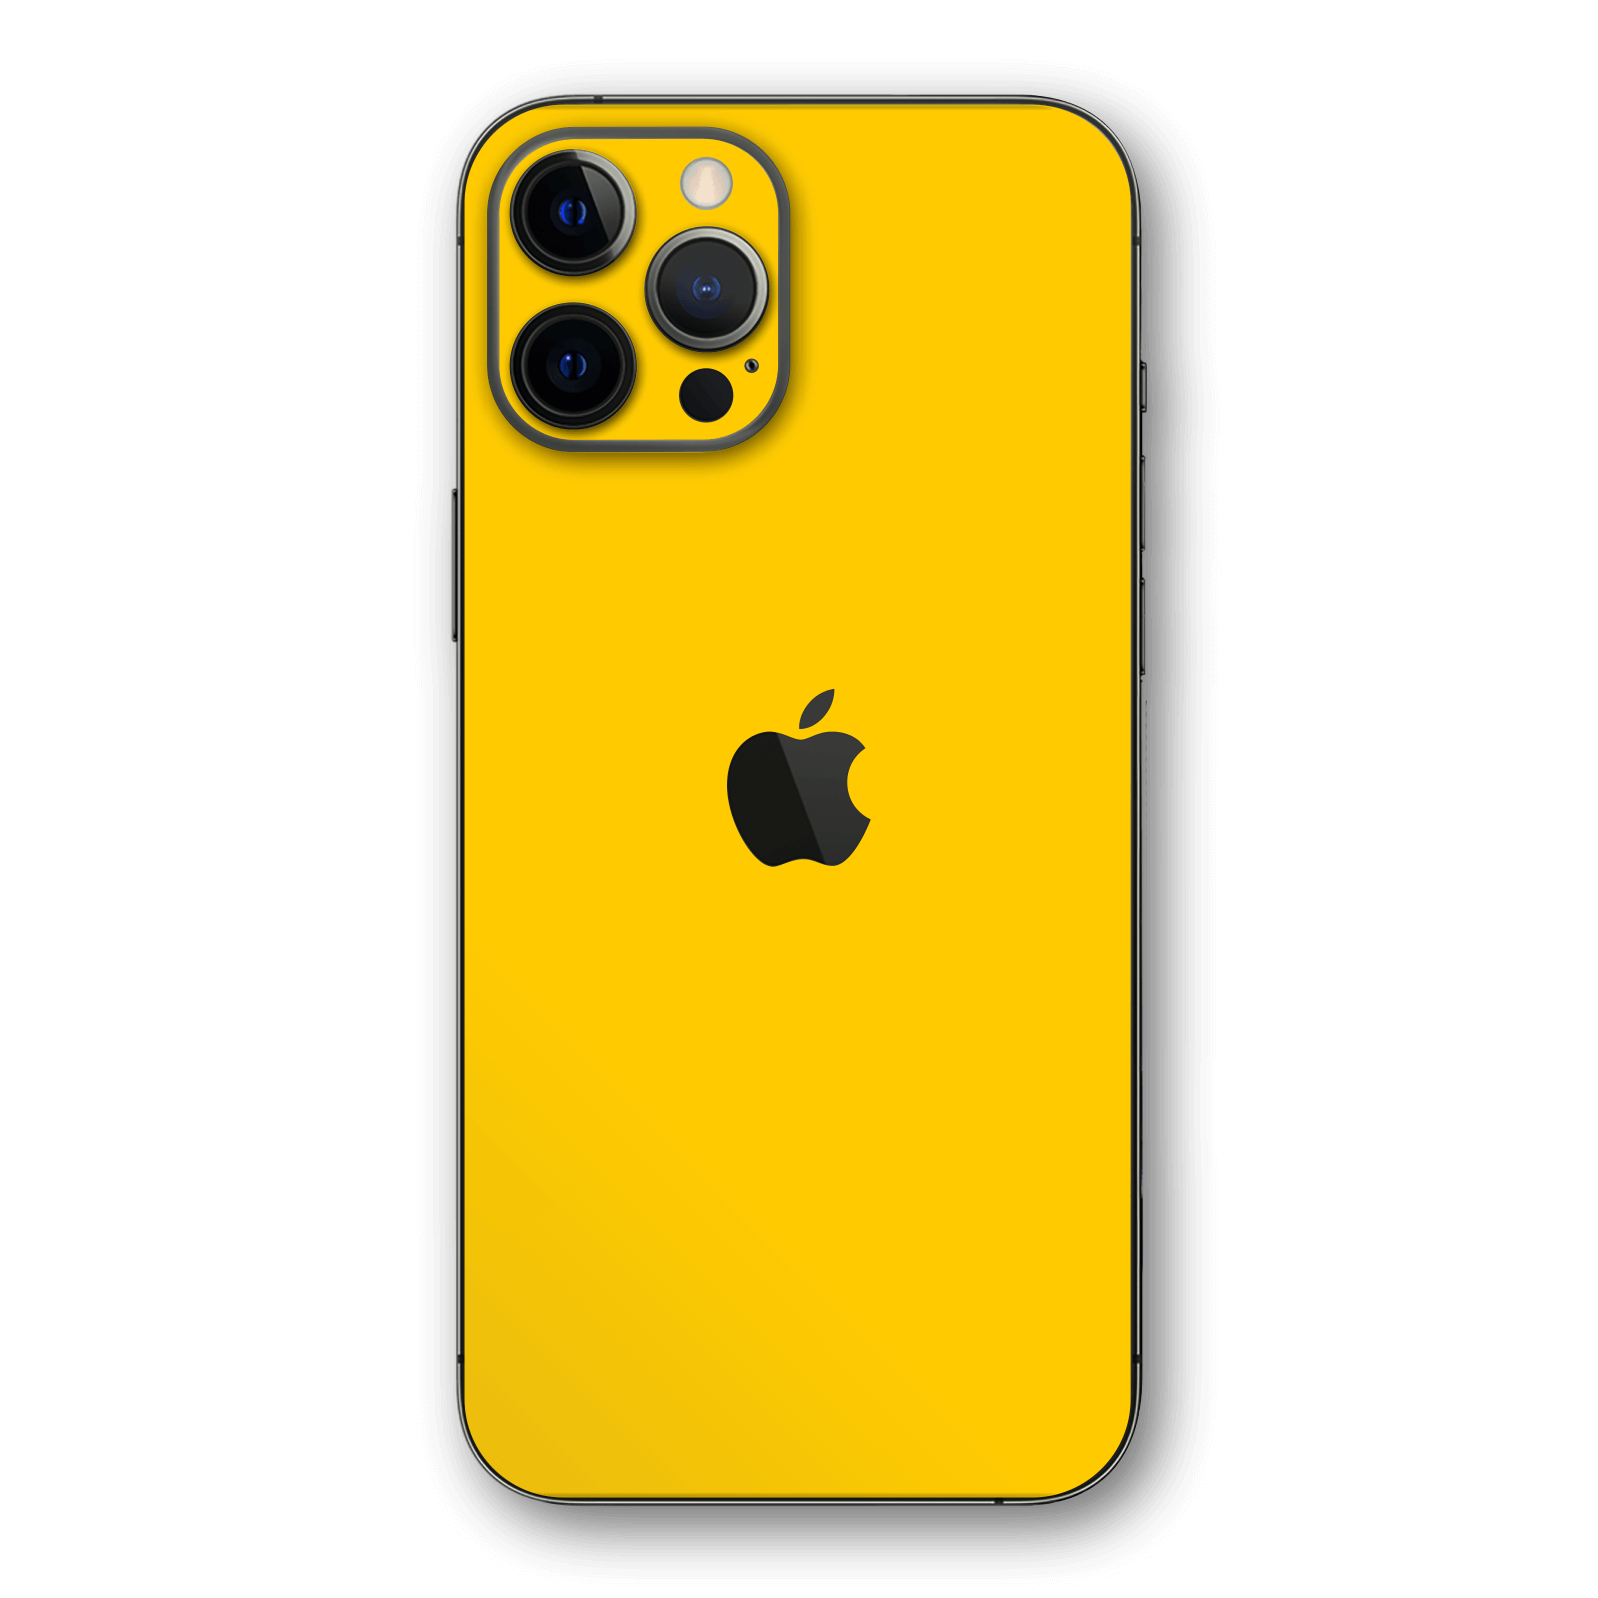 Iphone 12 Pro Max Golden Yellow Skin Wrap Easyskinz